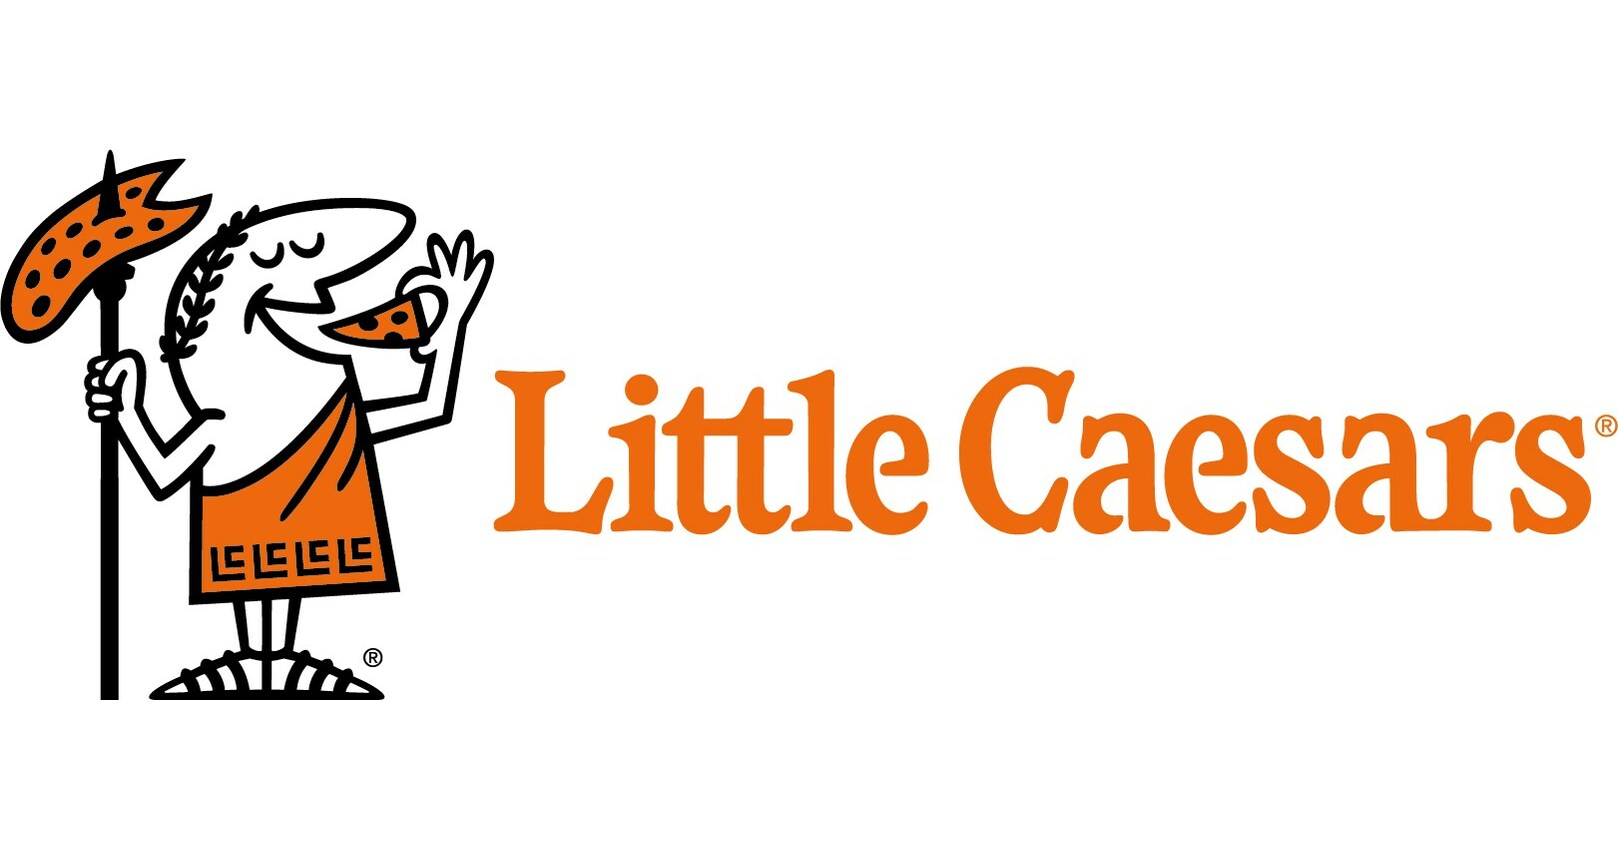 Little_Caesars_Little_Caesars_Continues_to_Provide_Everyday_Valu.jpg